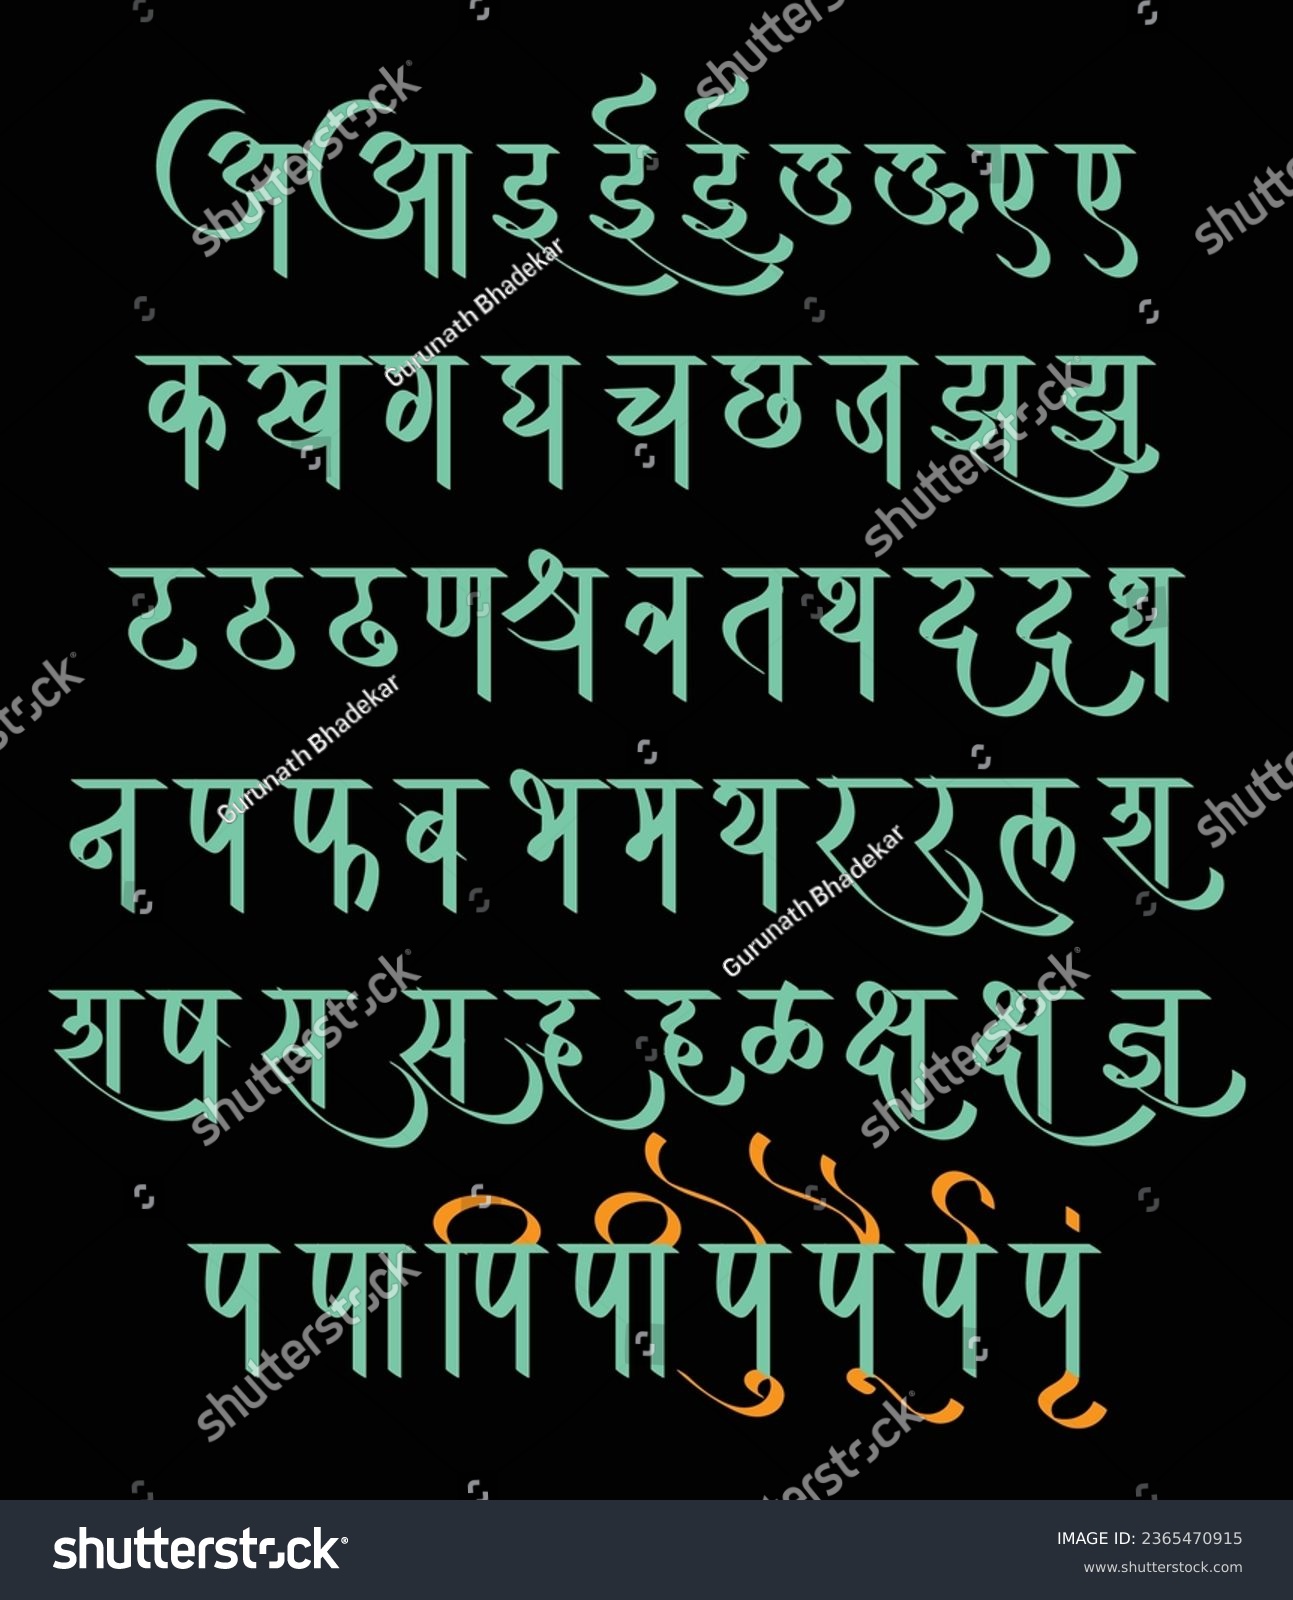 SVG of Handmade Devanagari thin Italic font for Indian languages Hindi, Sanskrit, and Marathi, alphabets.	 svg